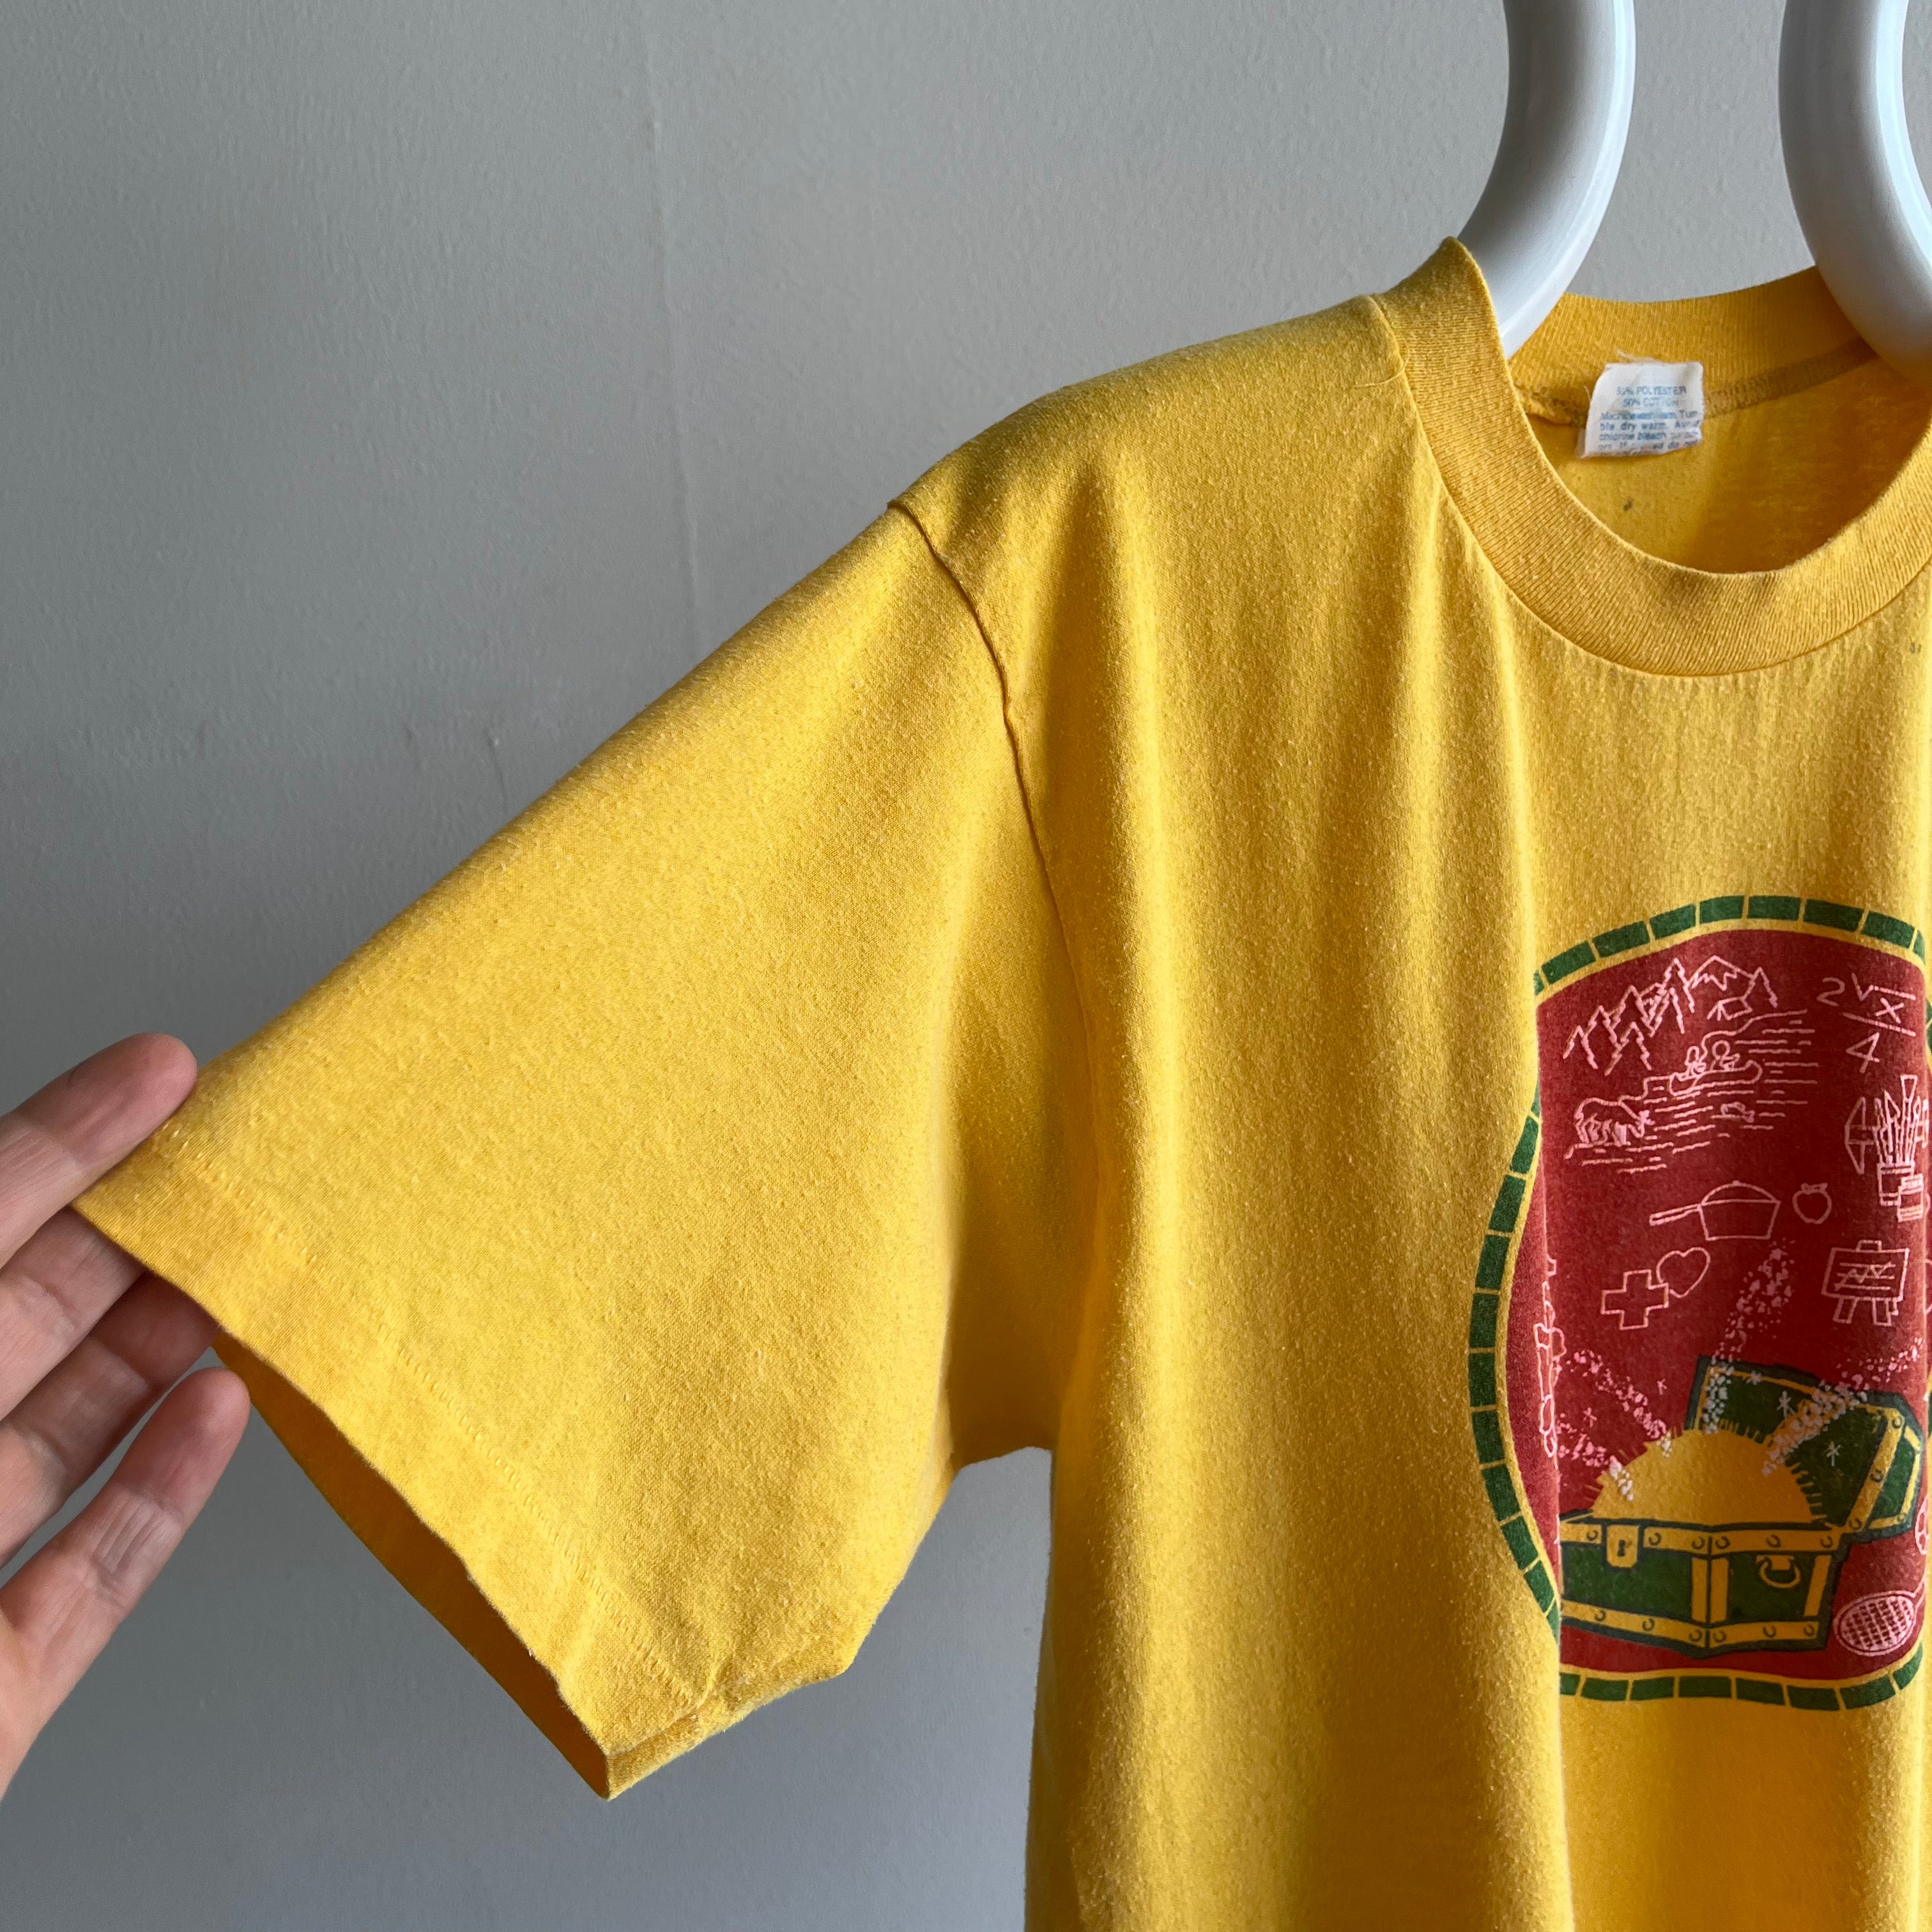 1980s Summer Camp T-shirt by Cal Cru